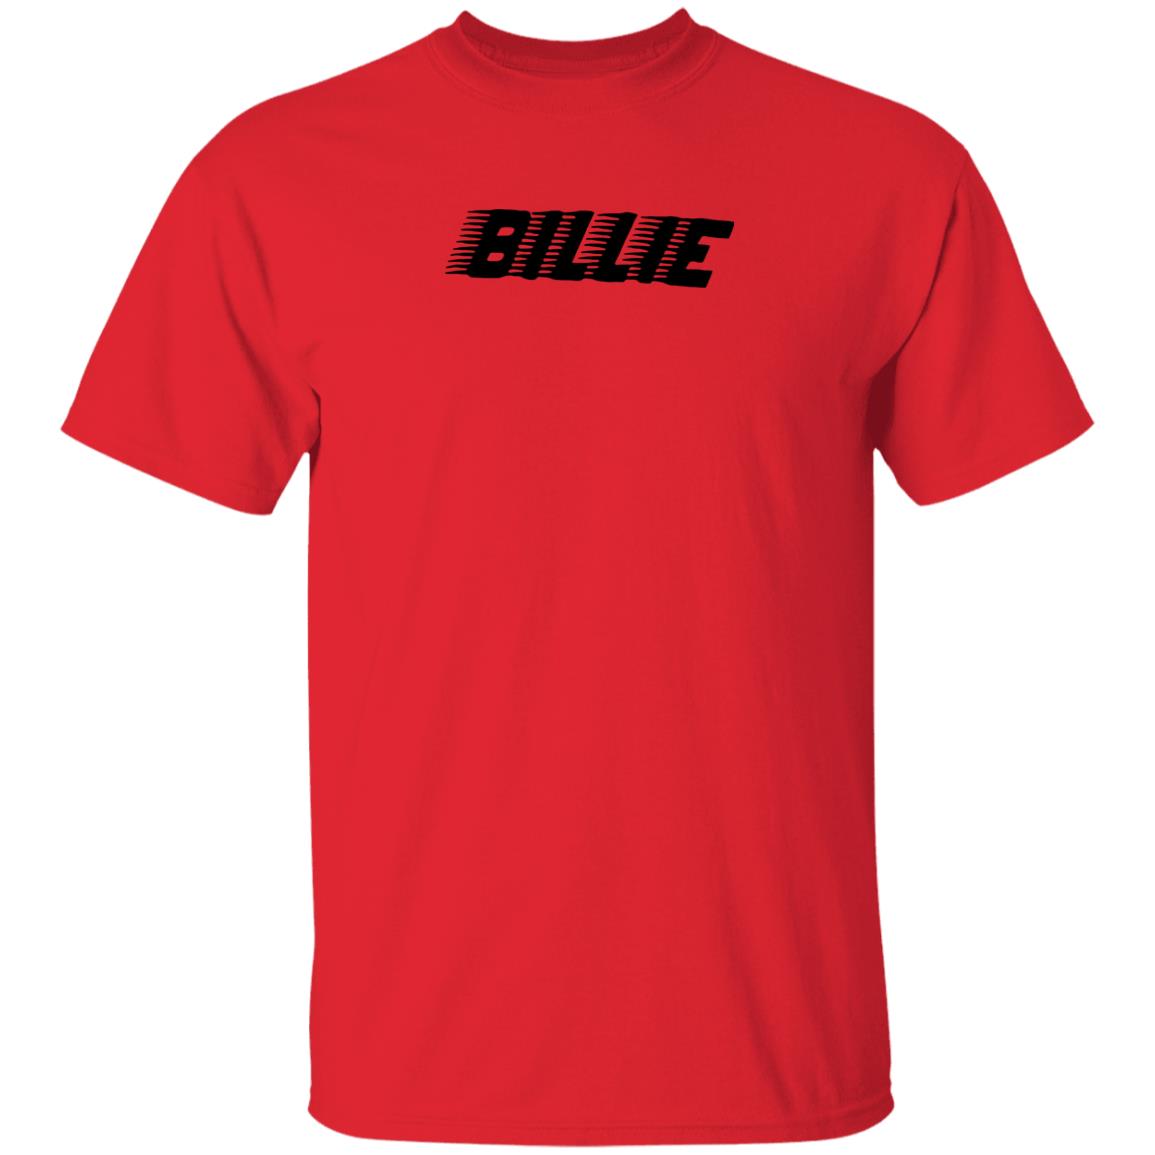 billie eilish red t shirt